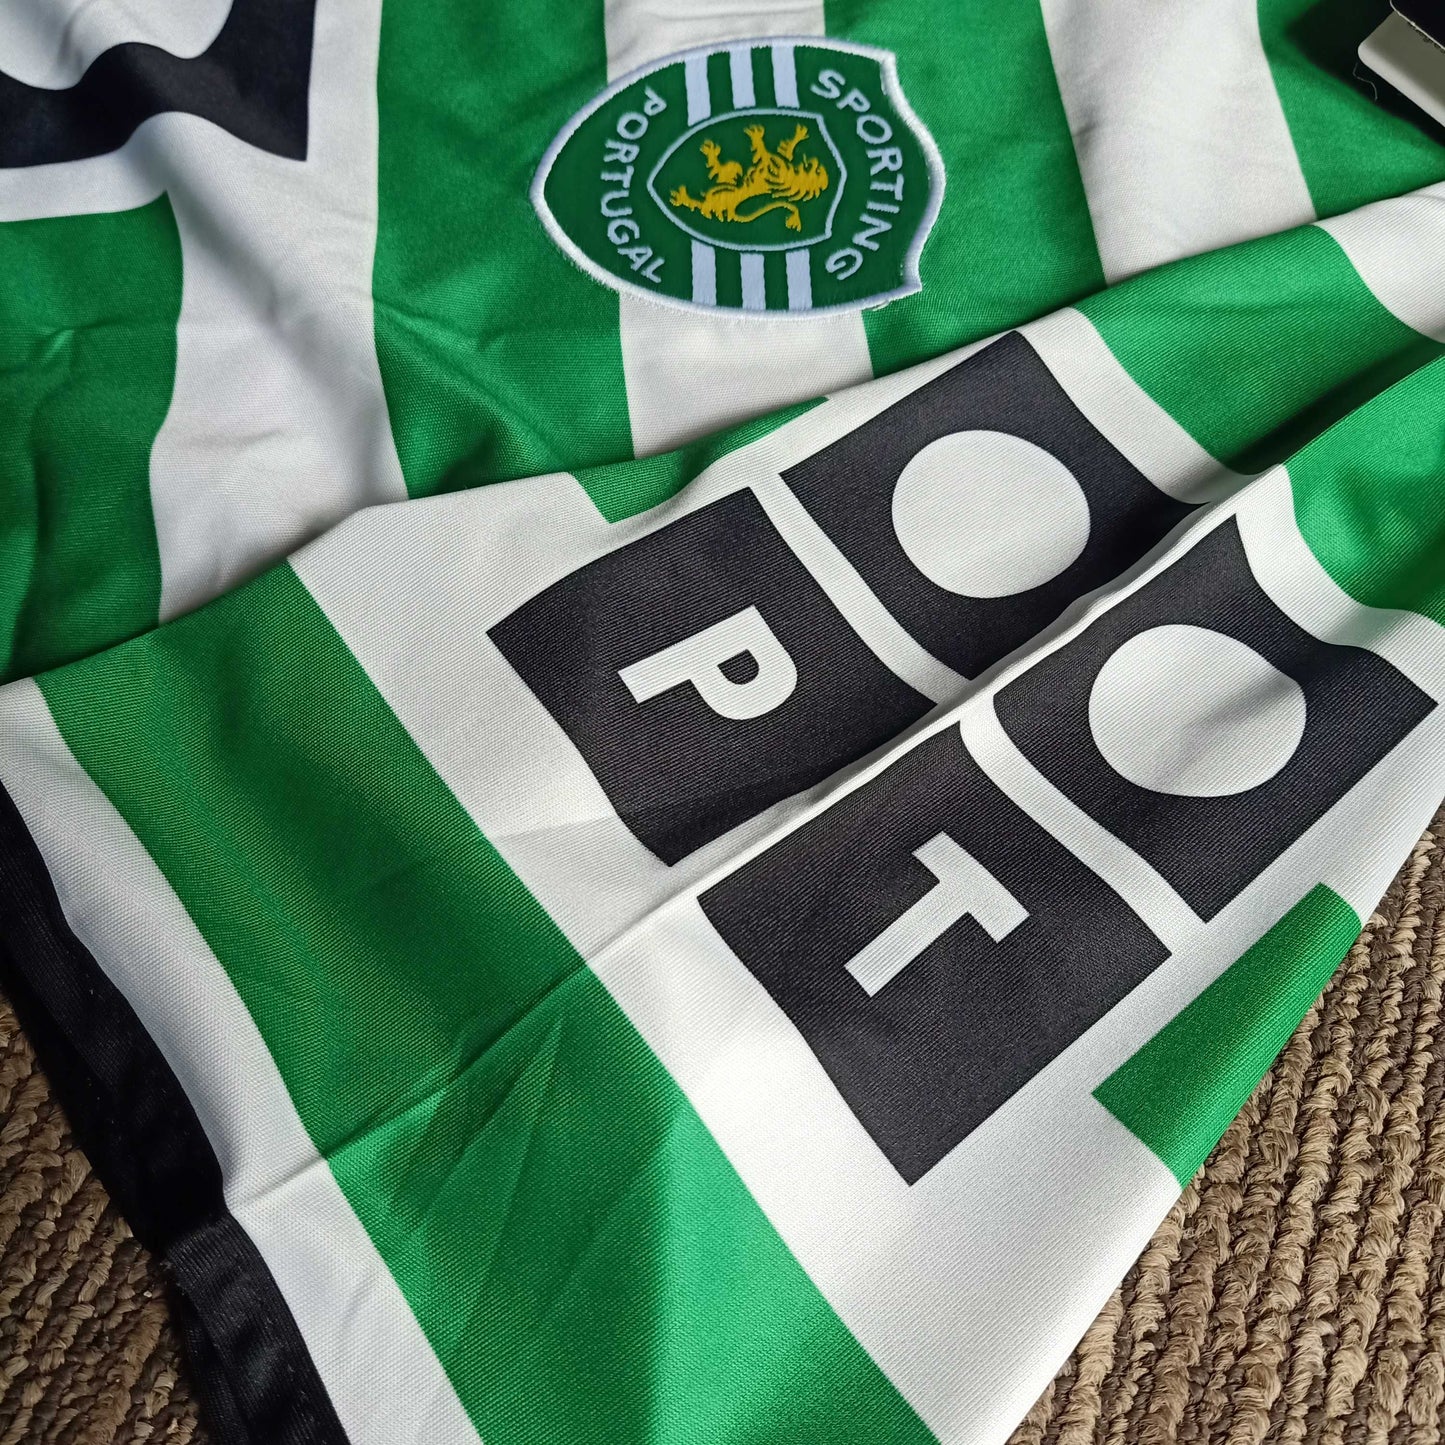 2003/04 Sporting Lisbon Home Shirt - ClassicFootballJersey